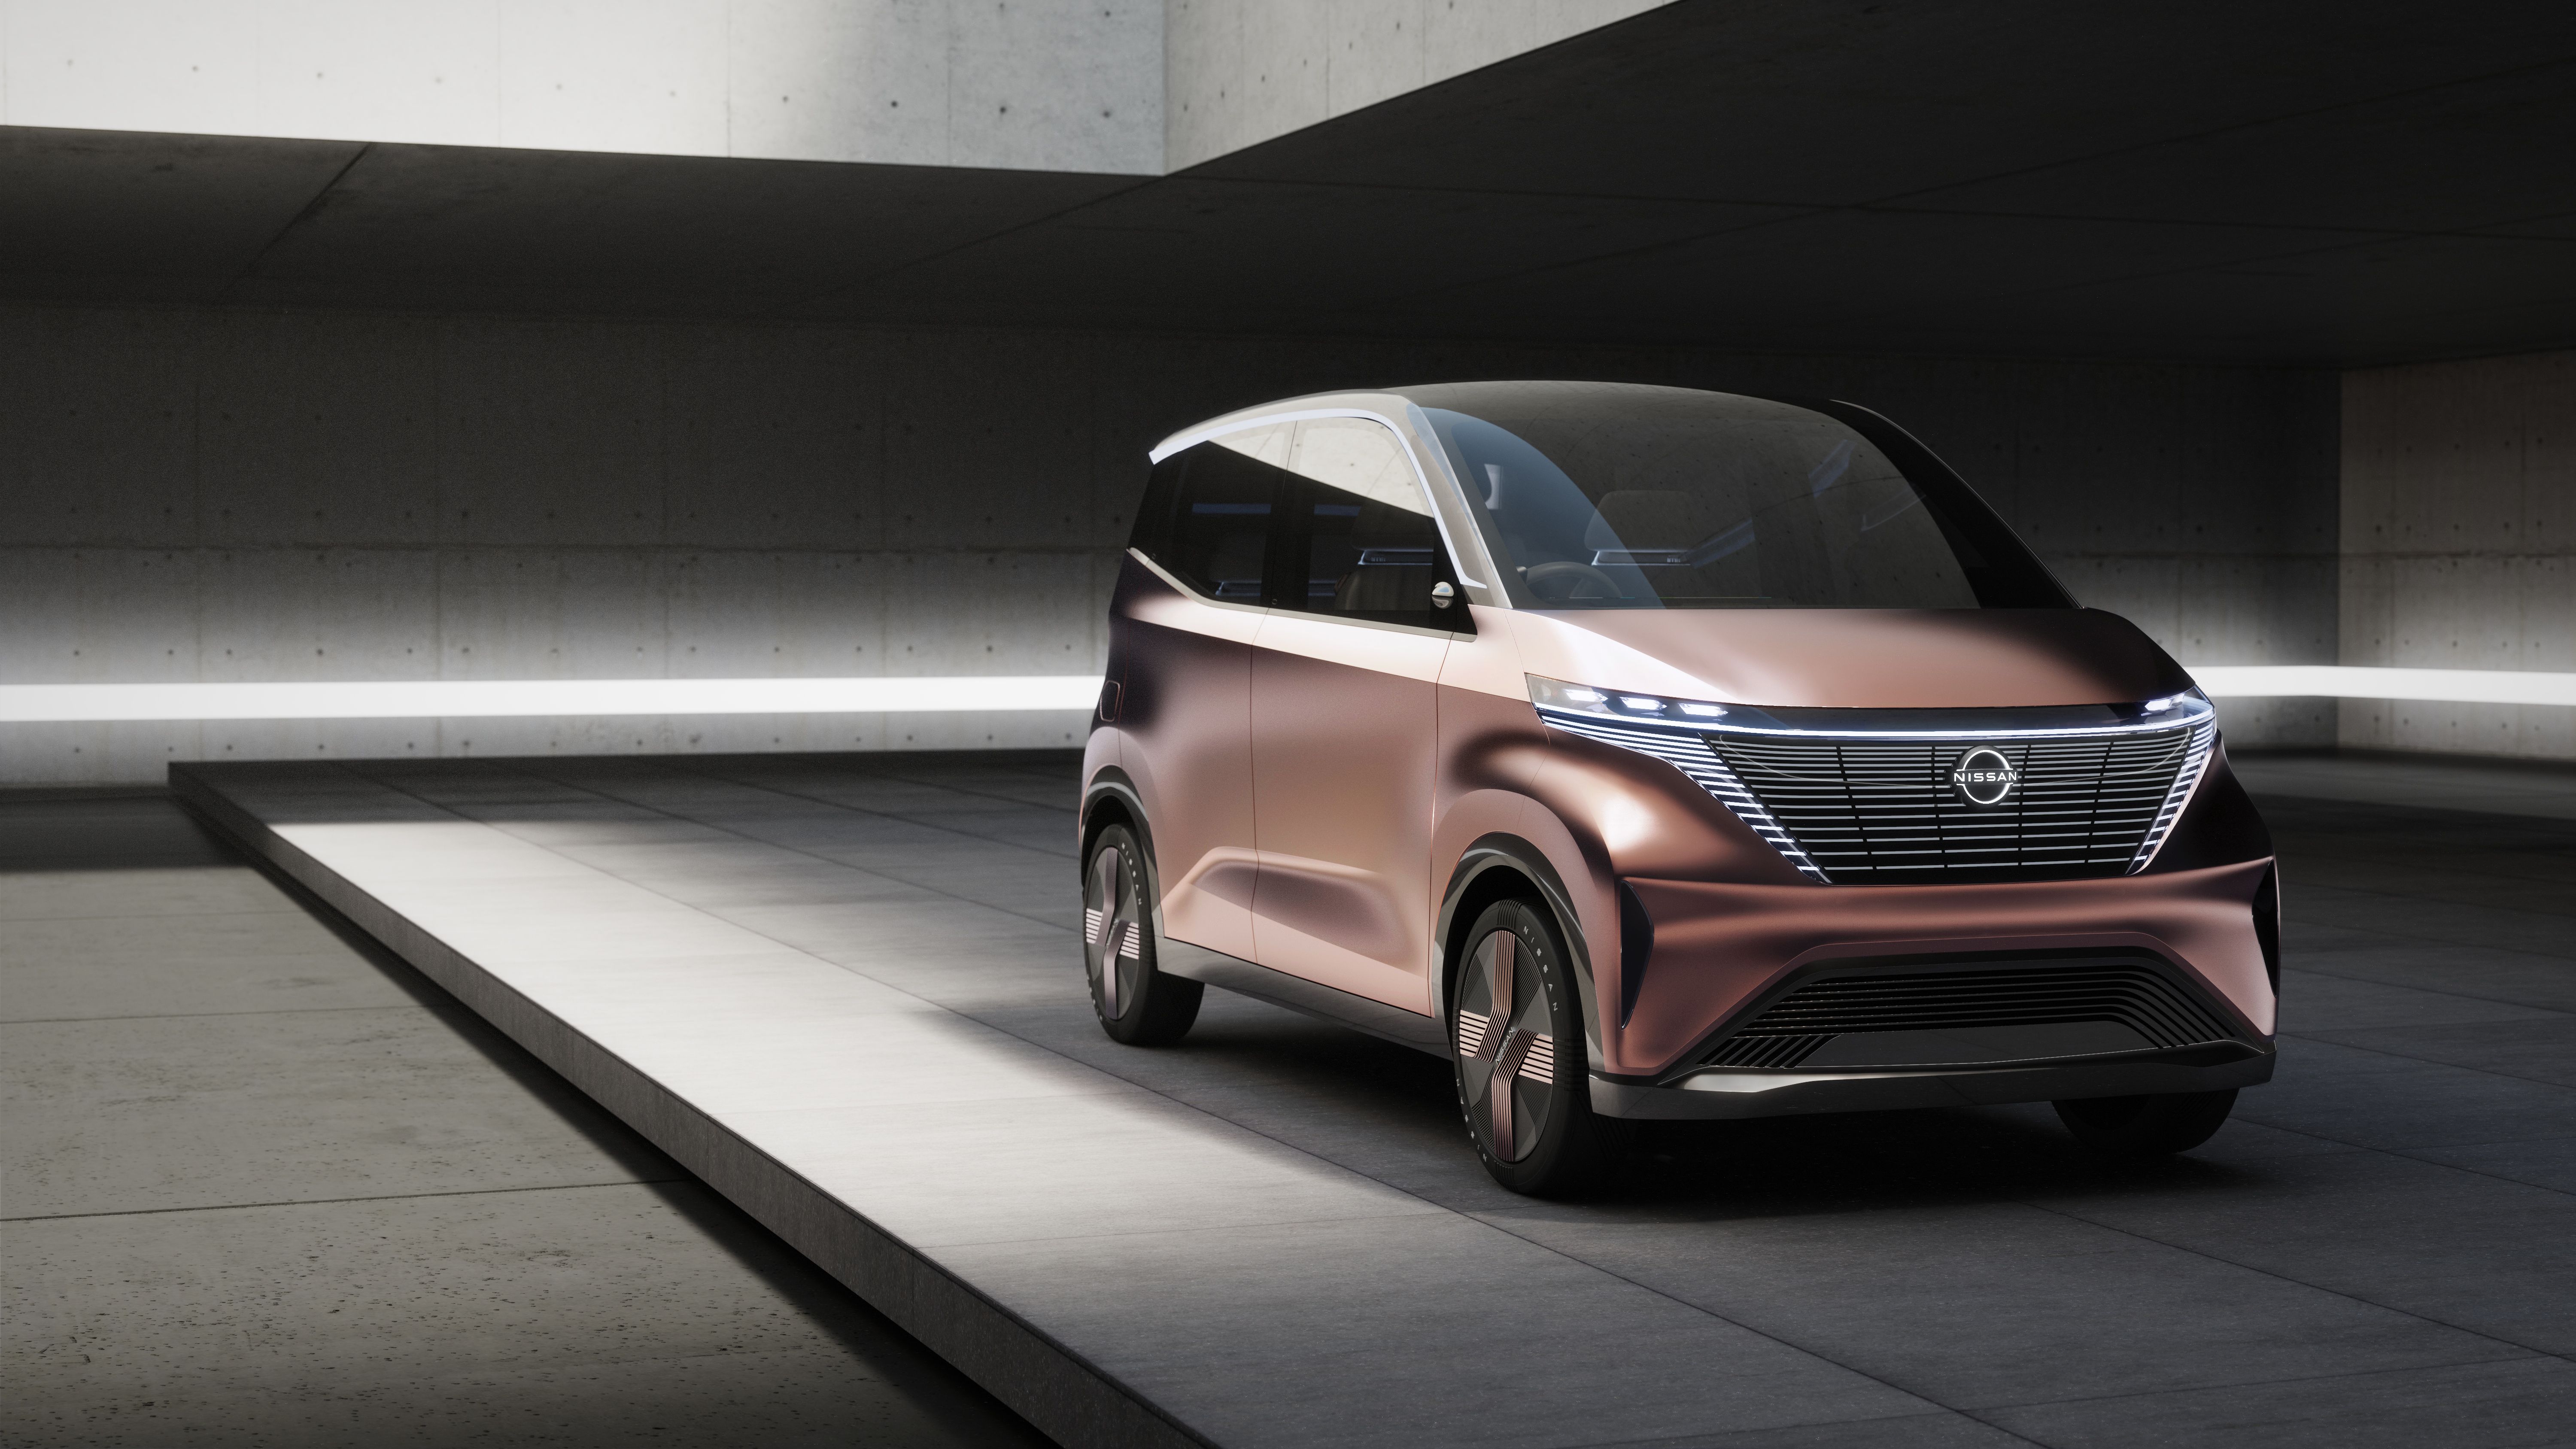 2019 Nissan IMk Concept